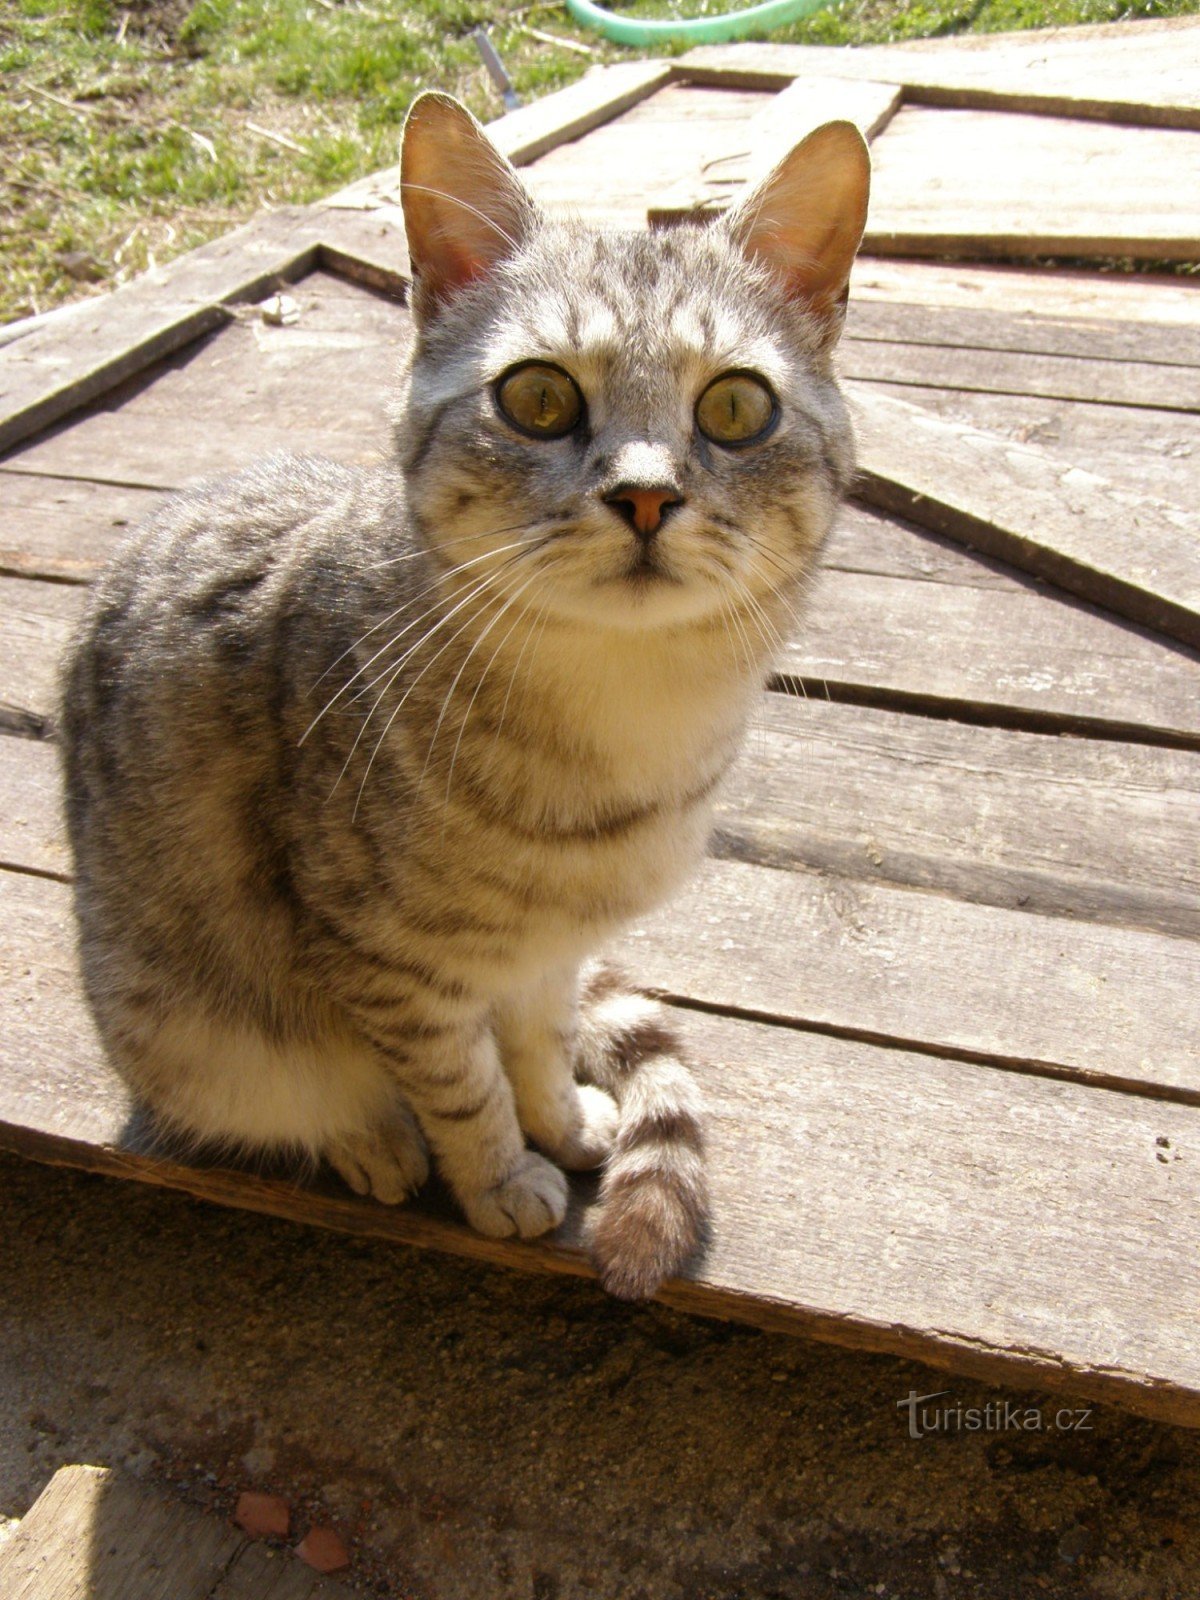 Кучерява кішка Ципка з козячої ферми Нова Виска